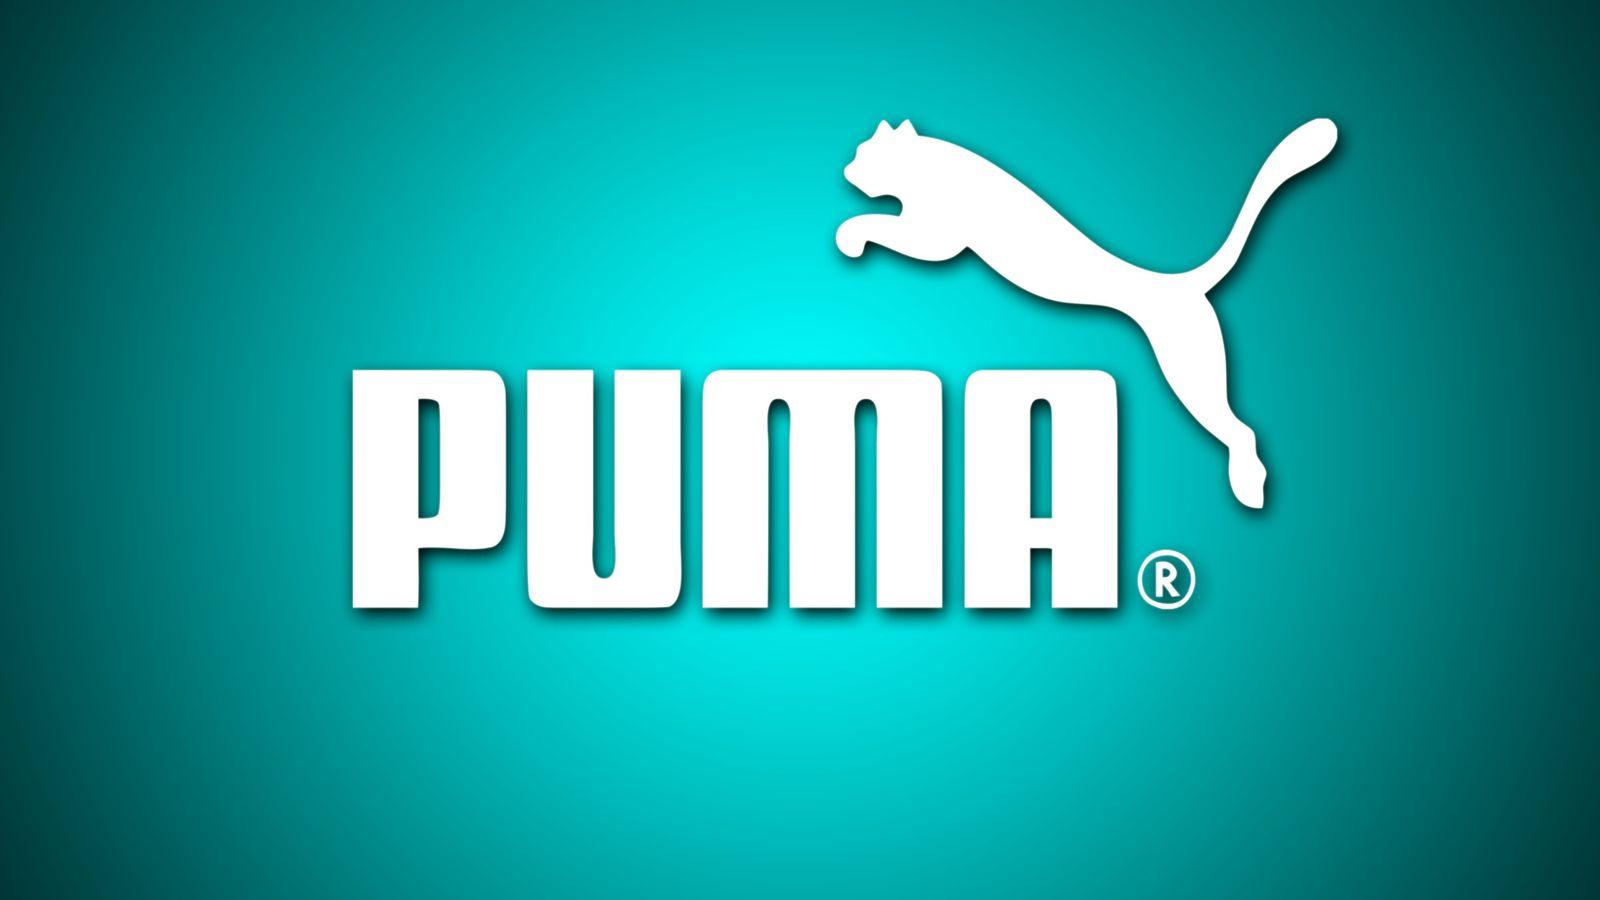 Puma Logo Wallpapers